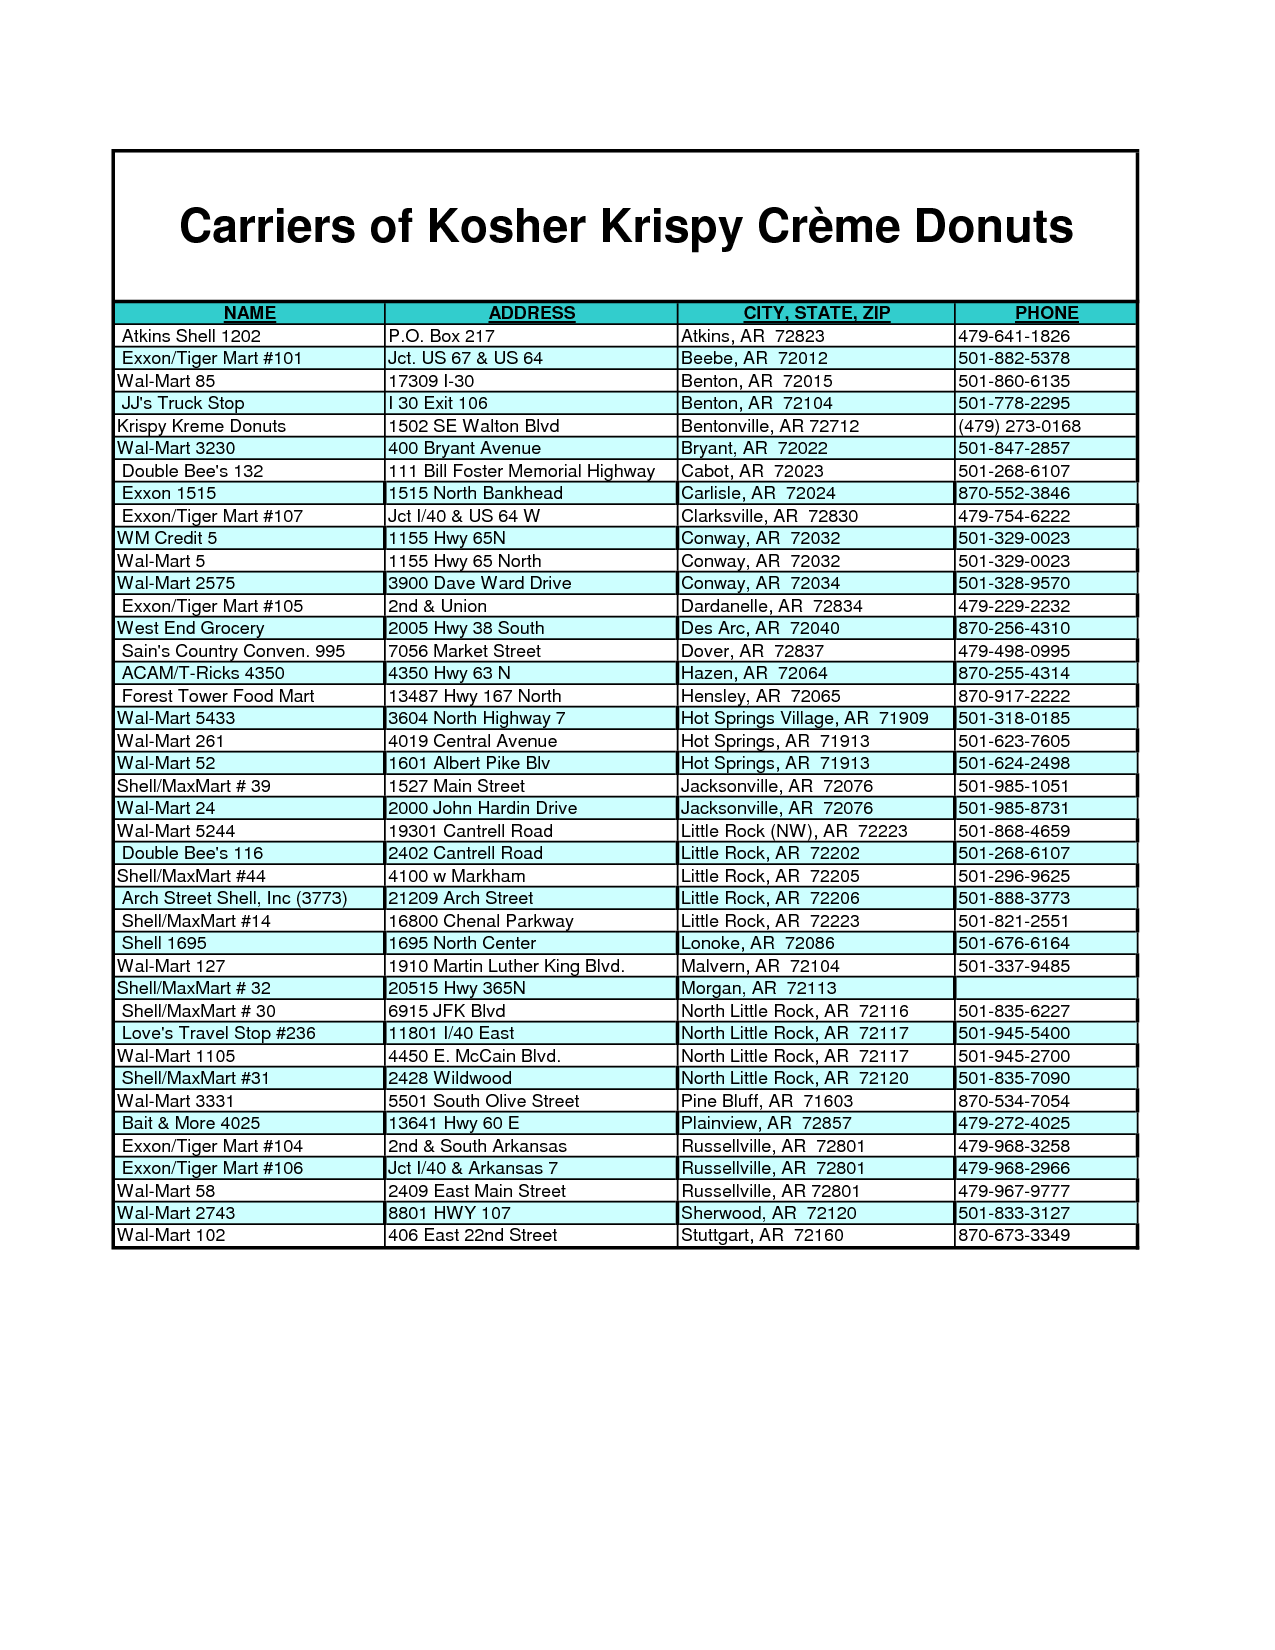 Ownership In Philippines Krispy Kreme Krispy Kreme Calories Bar